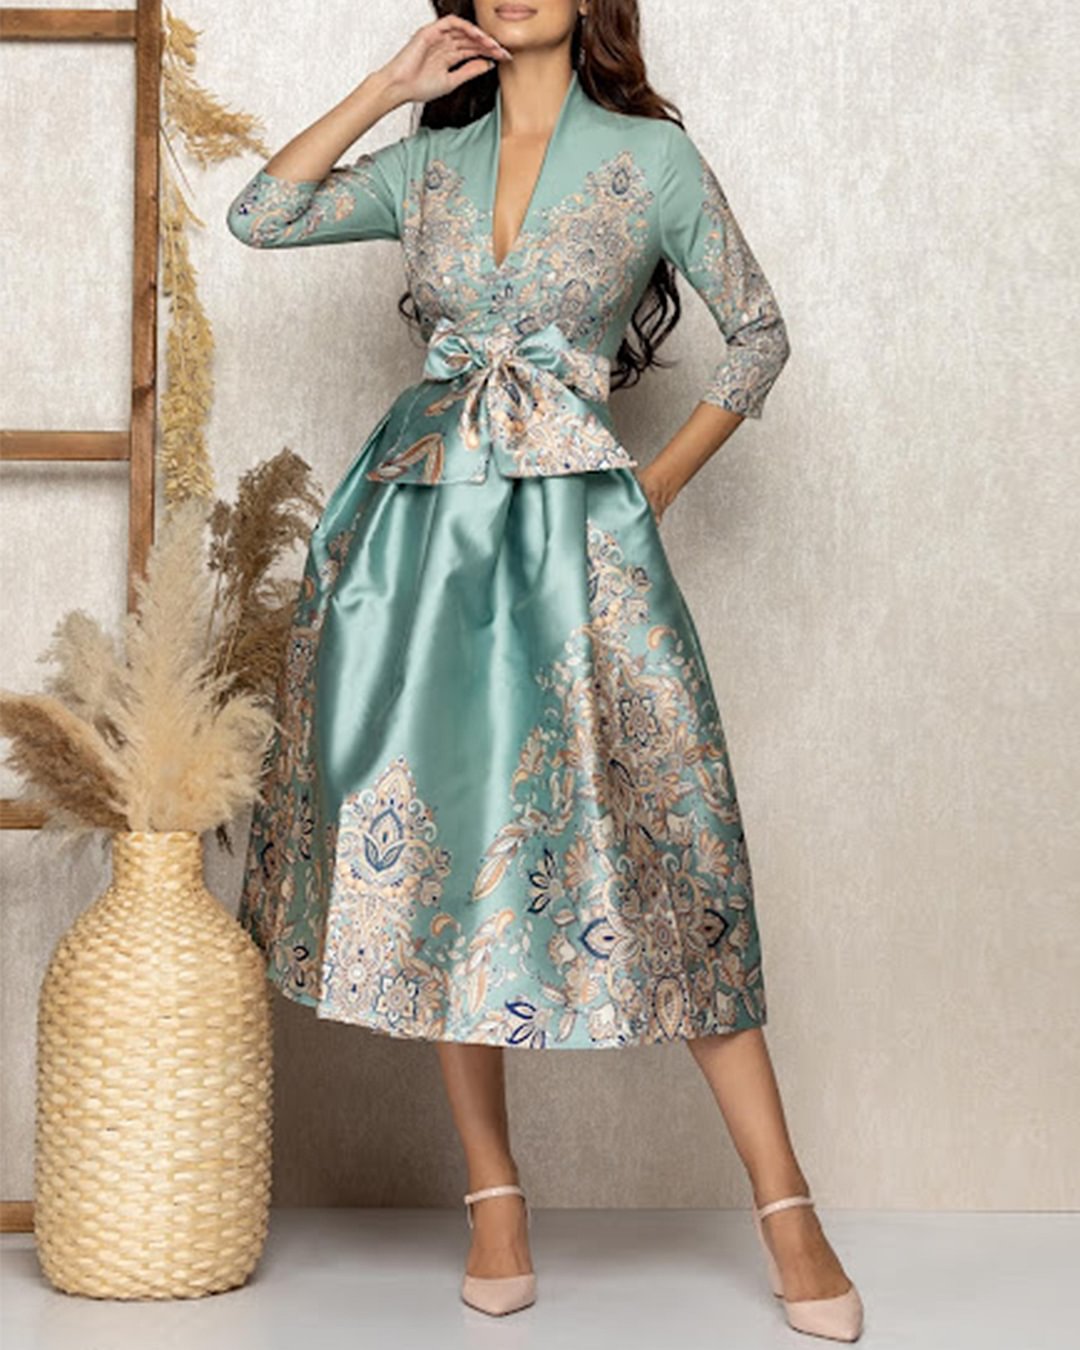 Stylish and elegant satin print dress